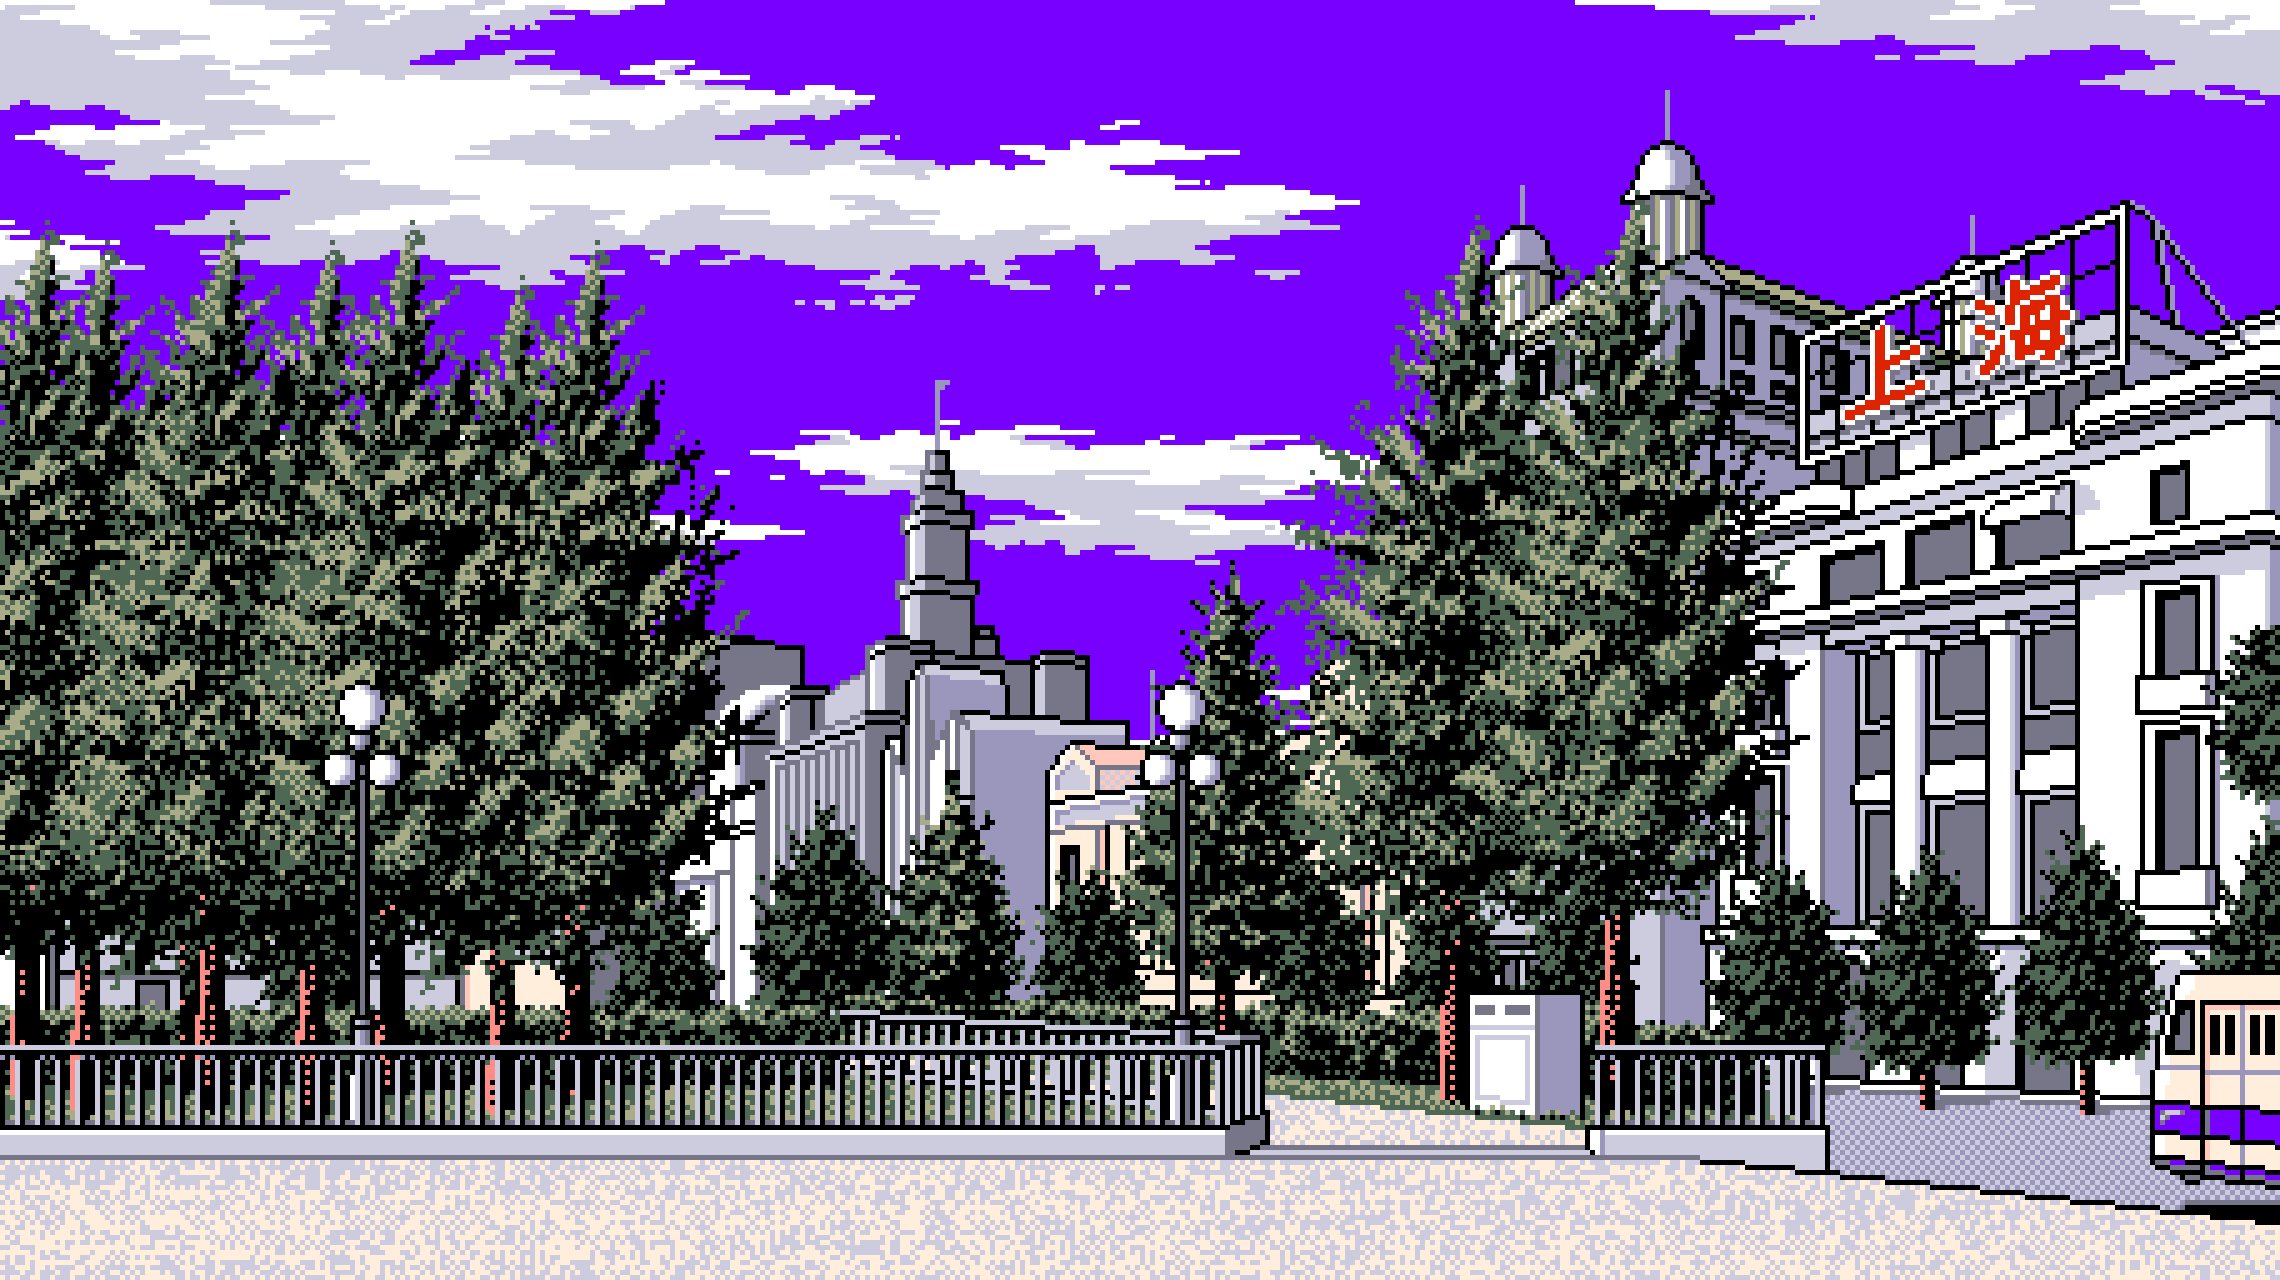 General 2280x1280 pixel art pixelated pixels digital art trees building fence park clouds purple sky